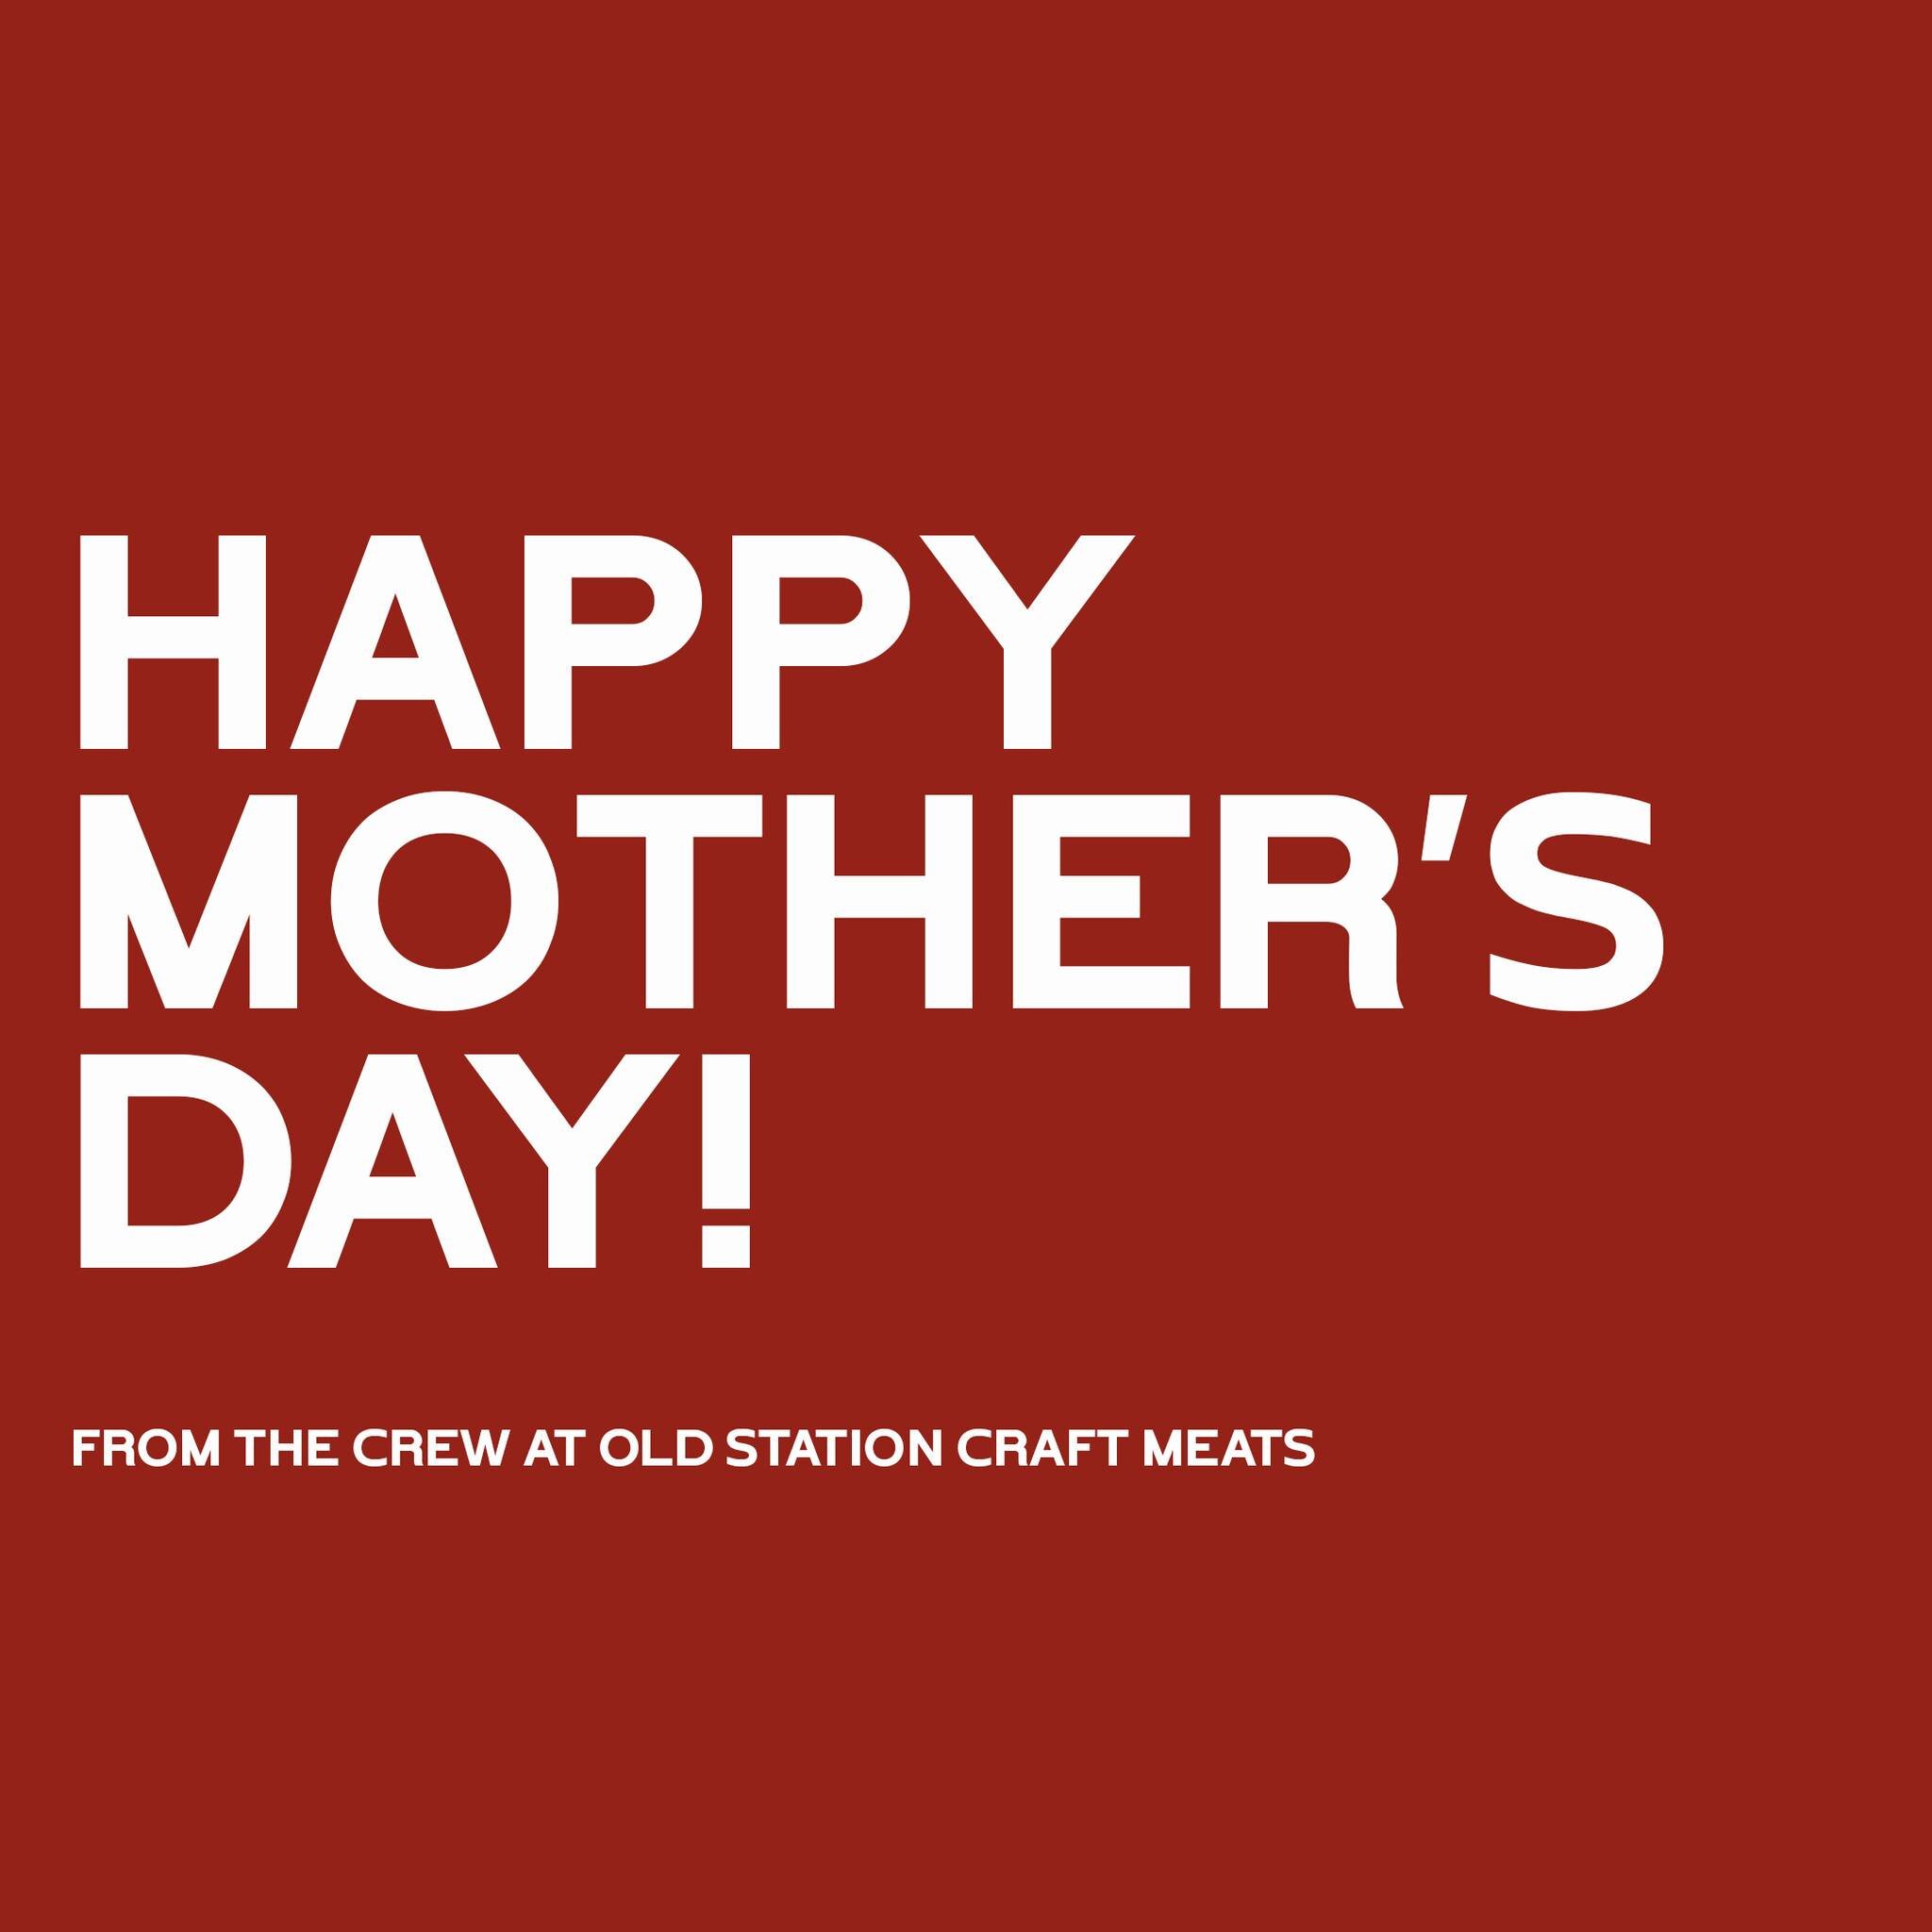 We're grateful for you, Mom! 

Happy Mother's Day.
.�
.
�.
�.
�.
�.�
#craftbutchery #iowabutcher #CATCHdsm #shoplocaldesmoines #iowabeef #shoplocal #butcher #iowabutcher